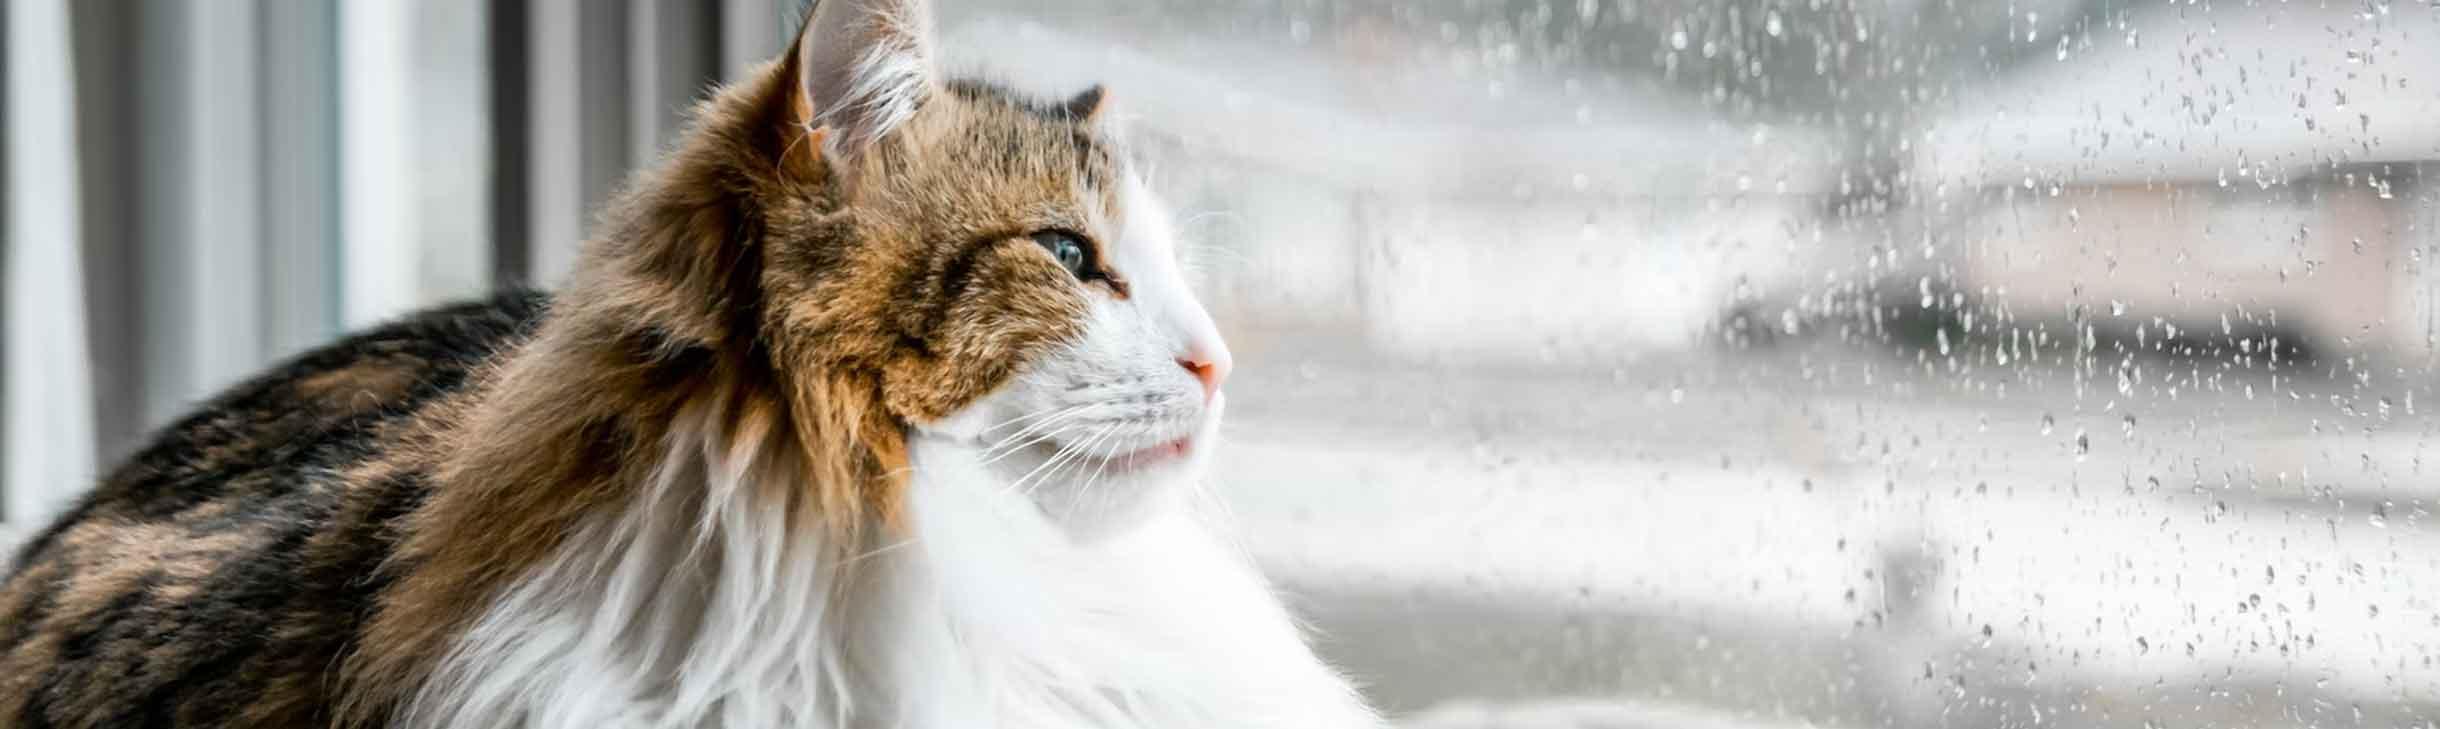 Katze bei Regen am Fenster